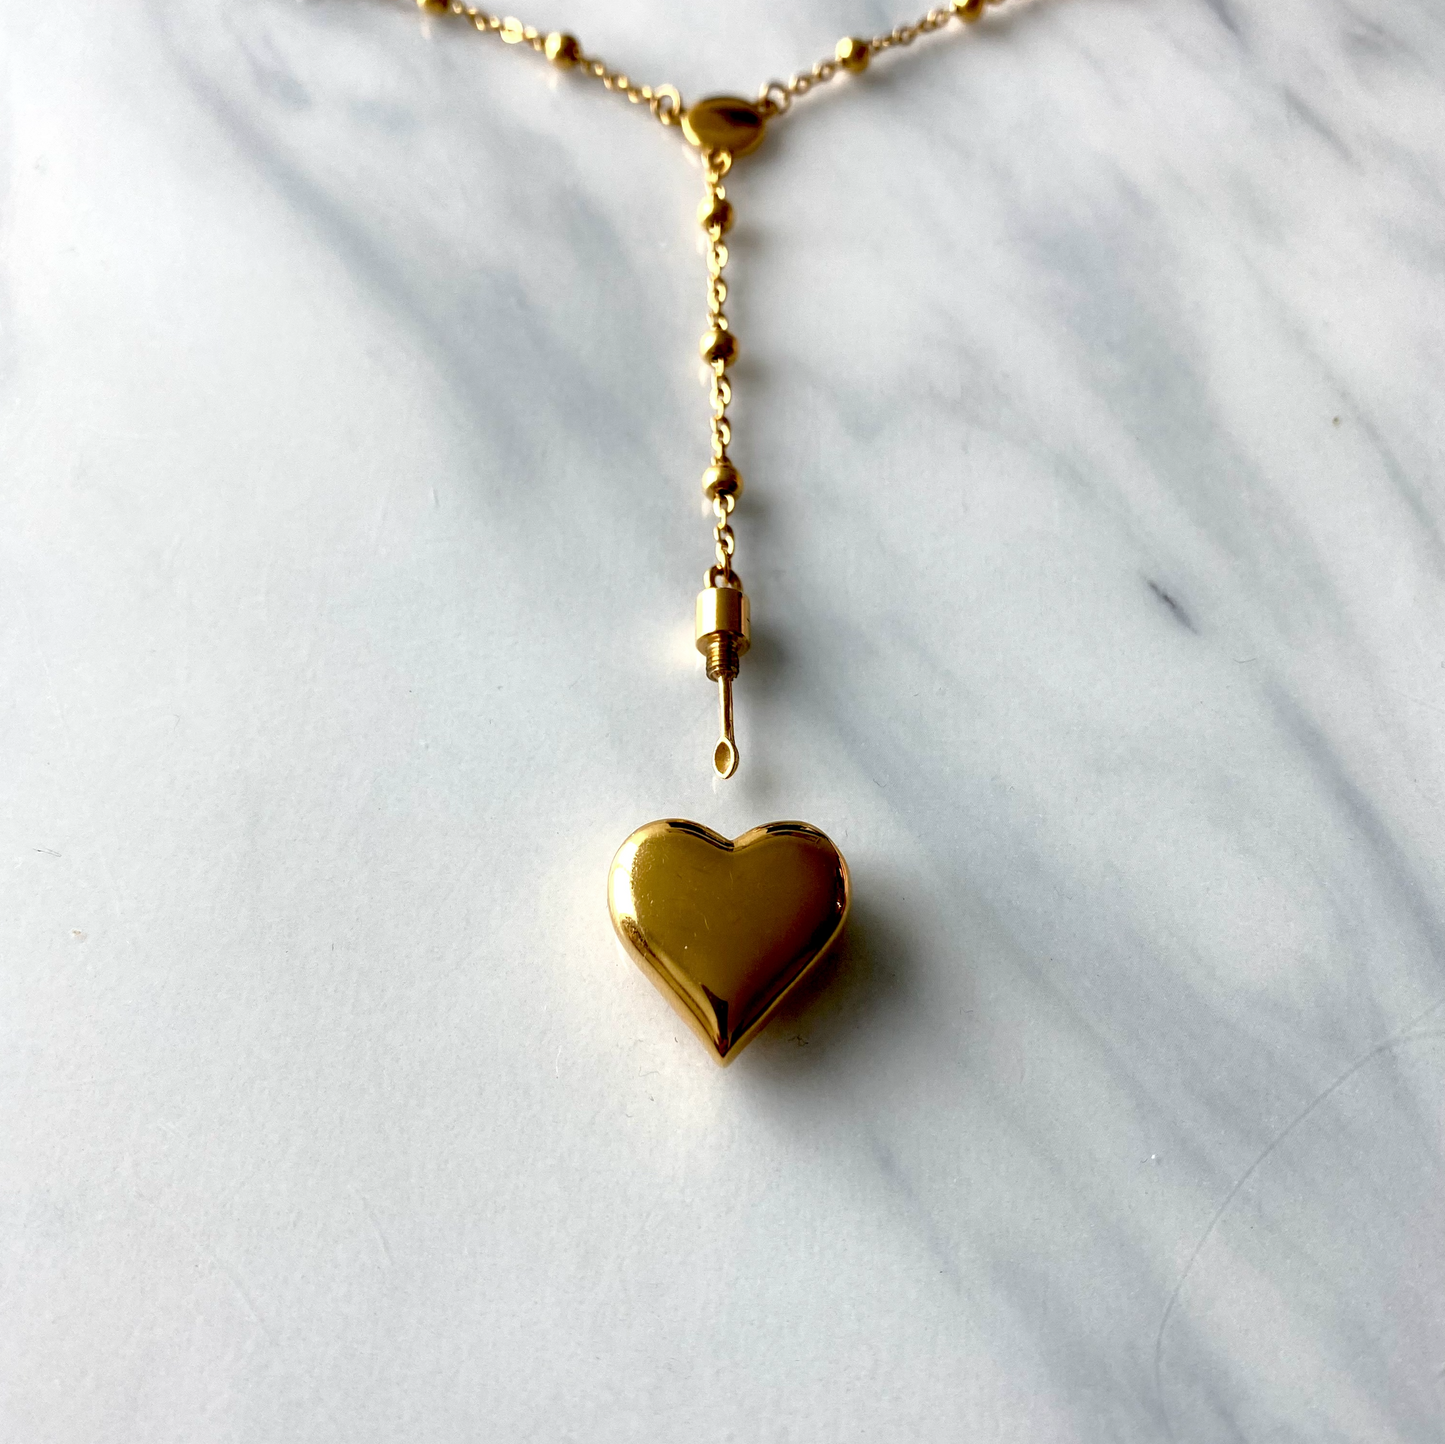 Del Rey Ldr Inspired Heart Stash Necklace